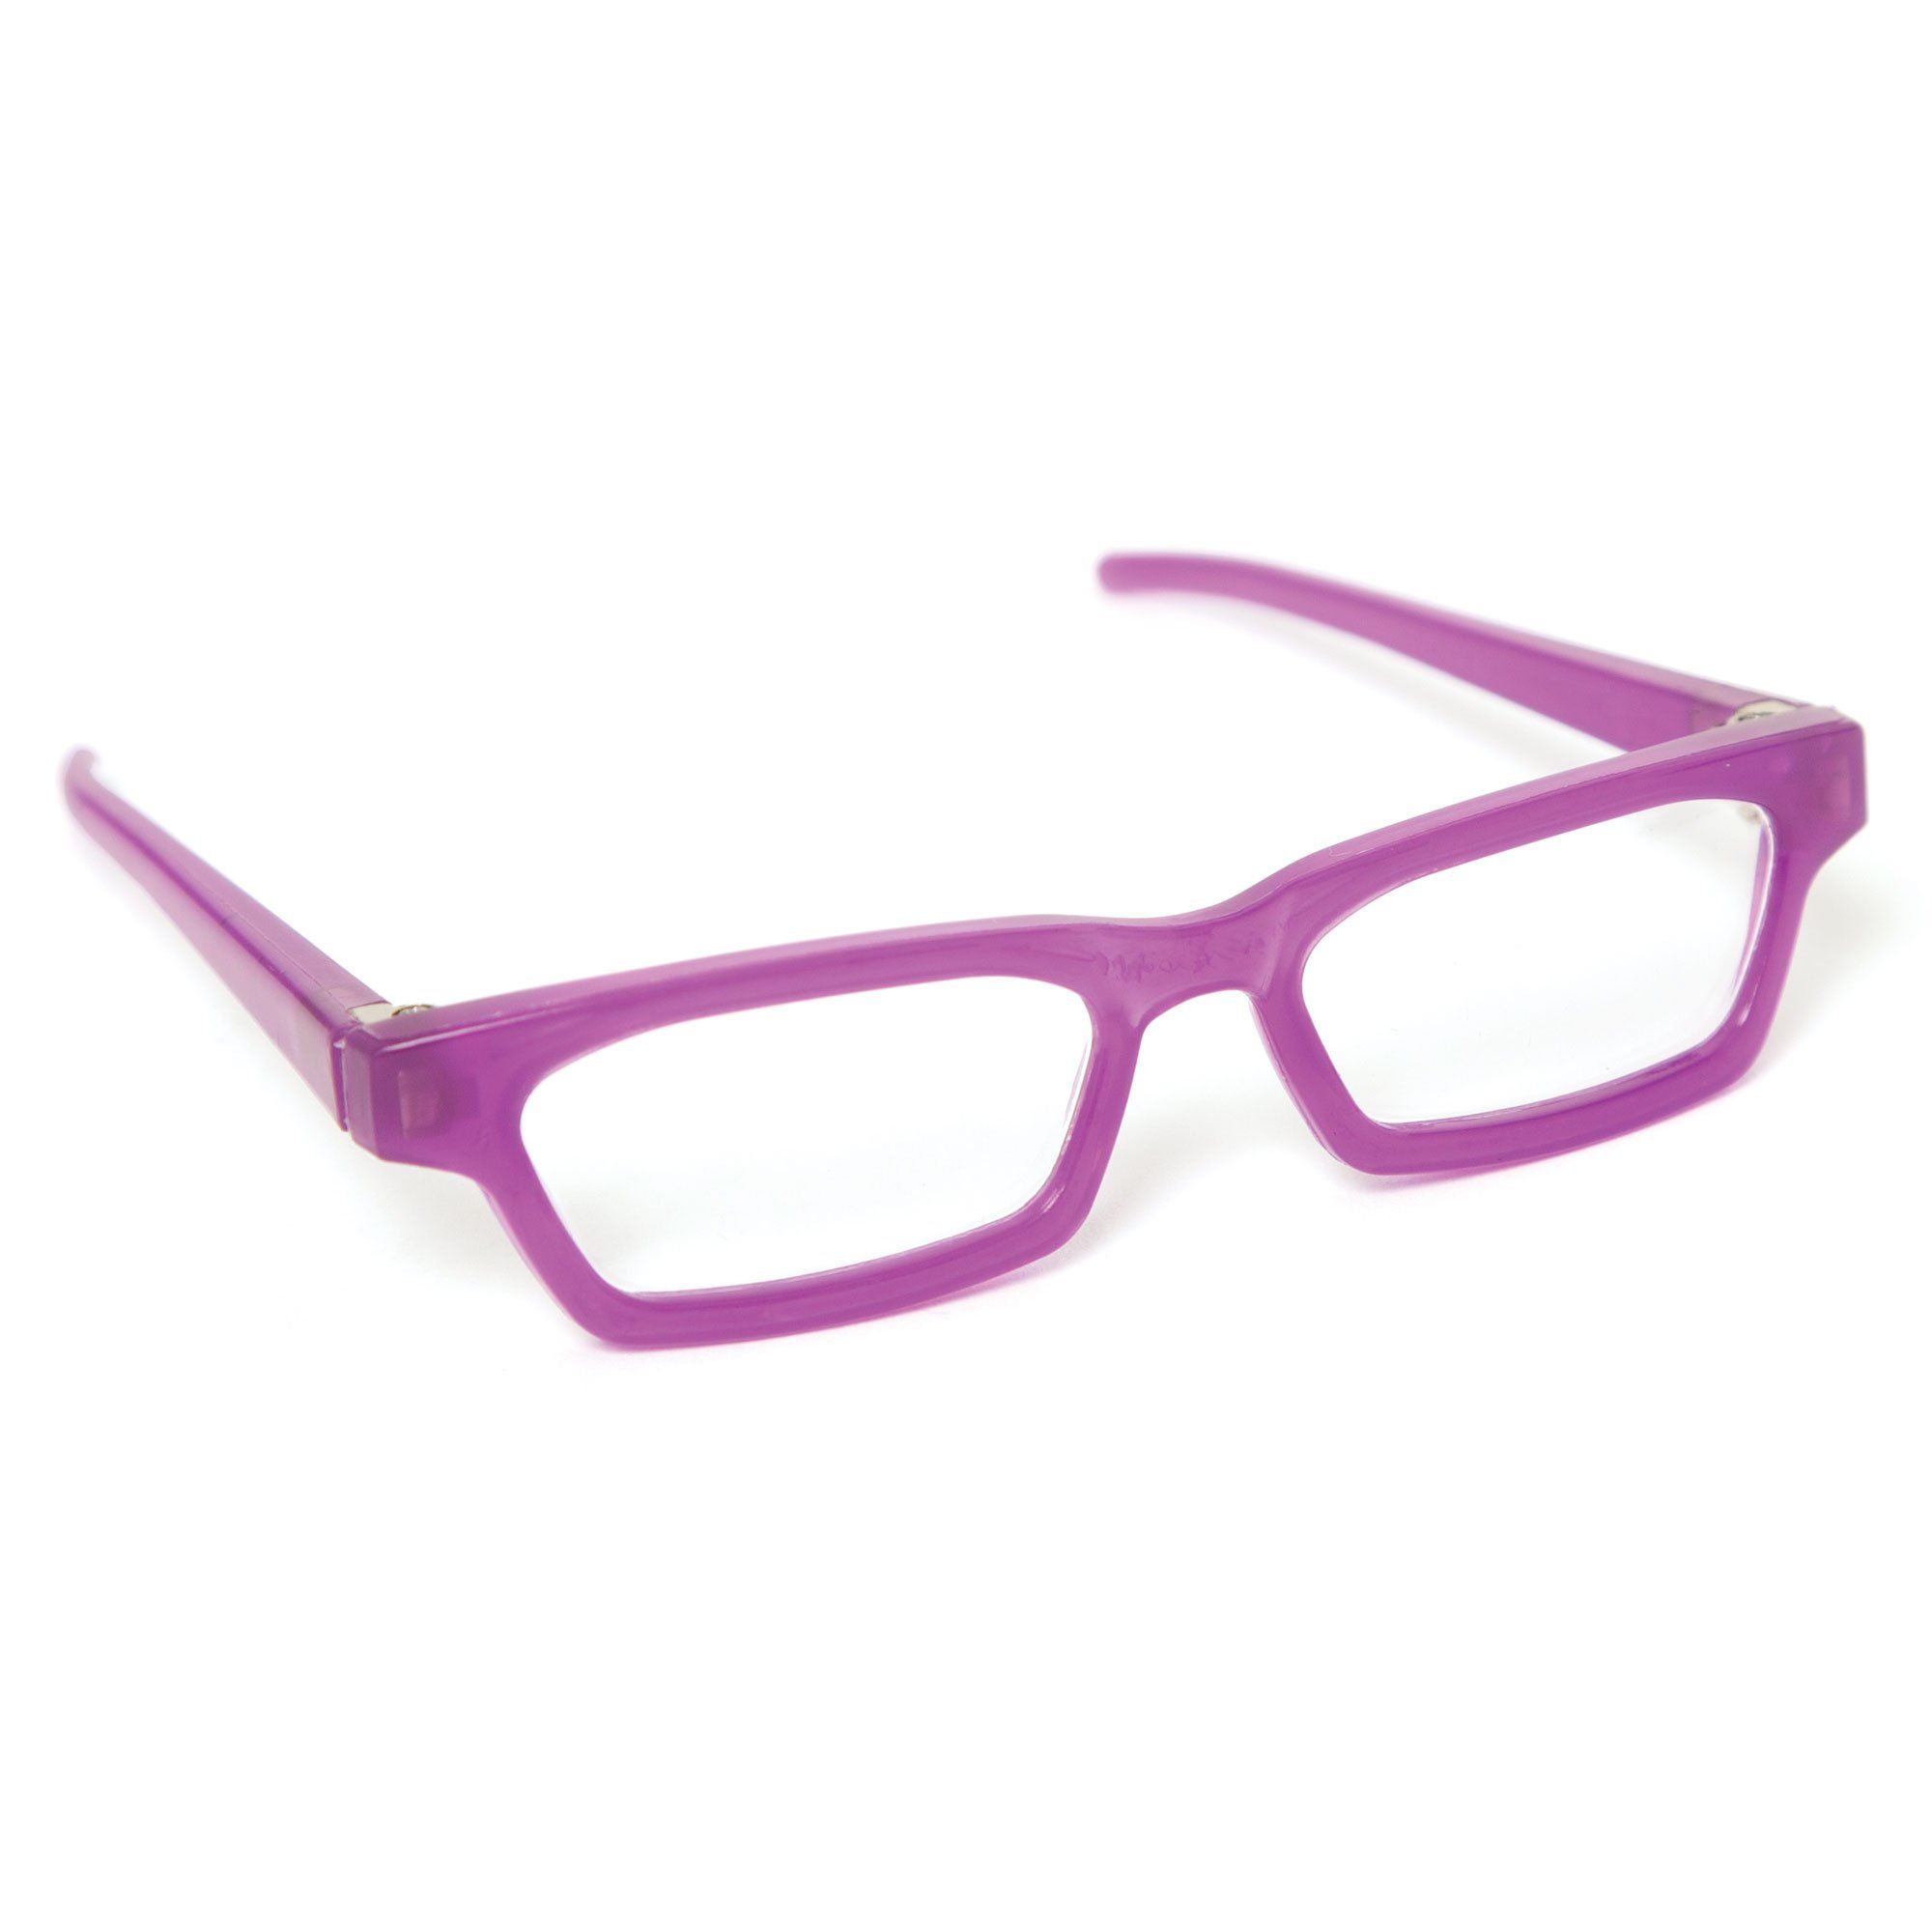 Purple glasses for 18 inch dolls